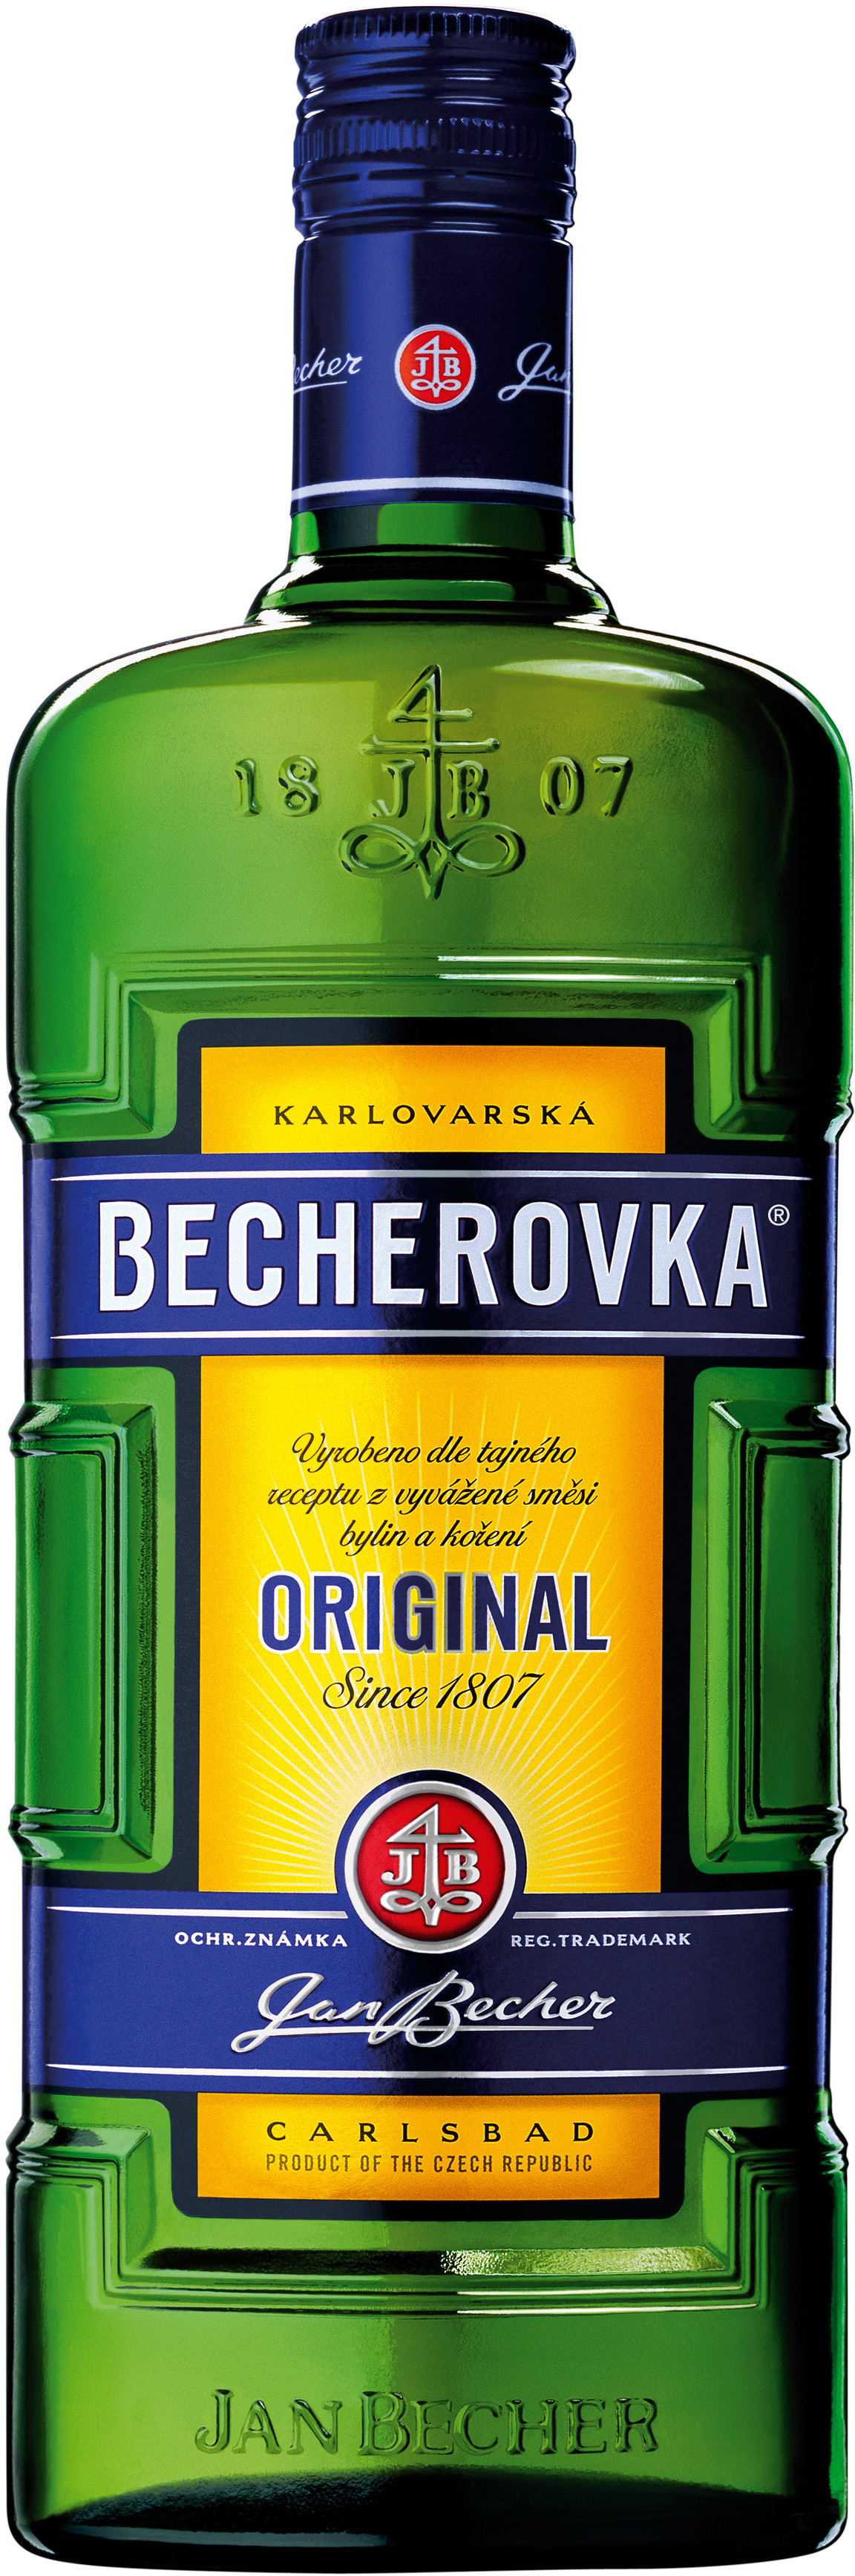 Becherovka Carlsbad 38% 0.5L in duty-free at bordershop Chop Tysa